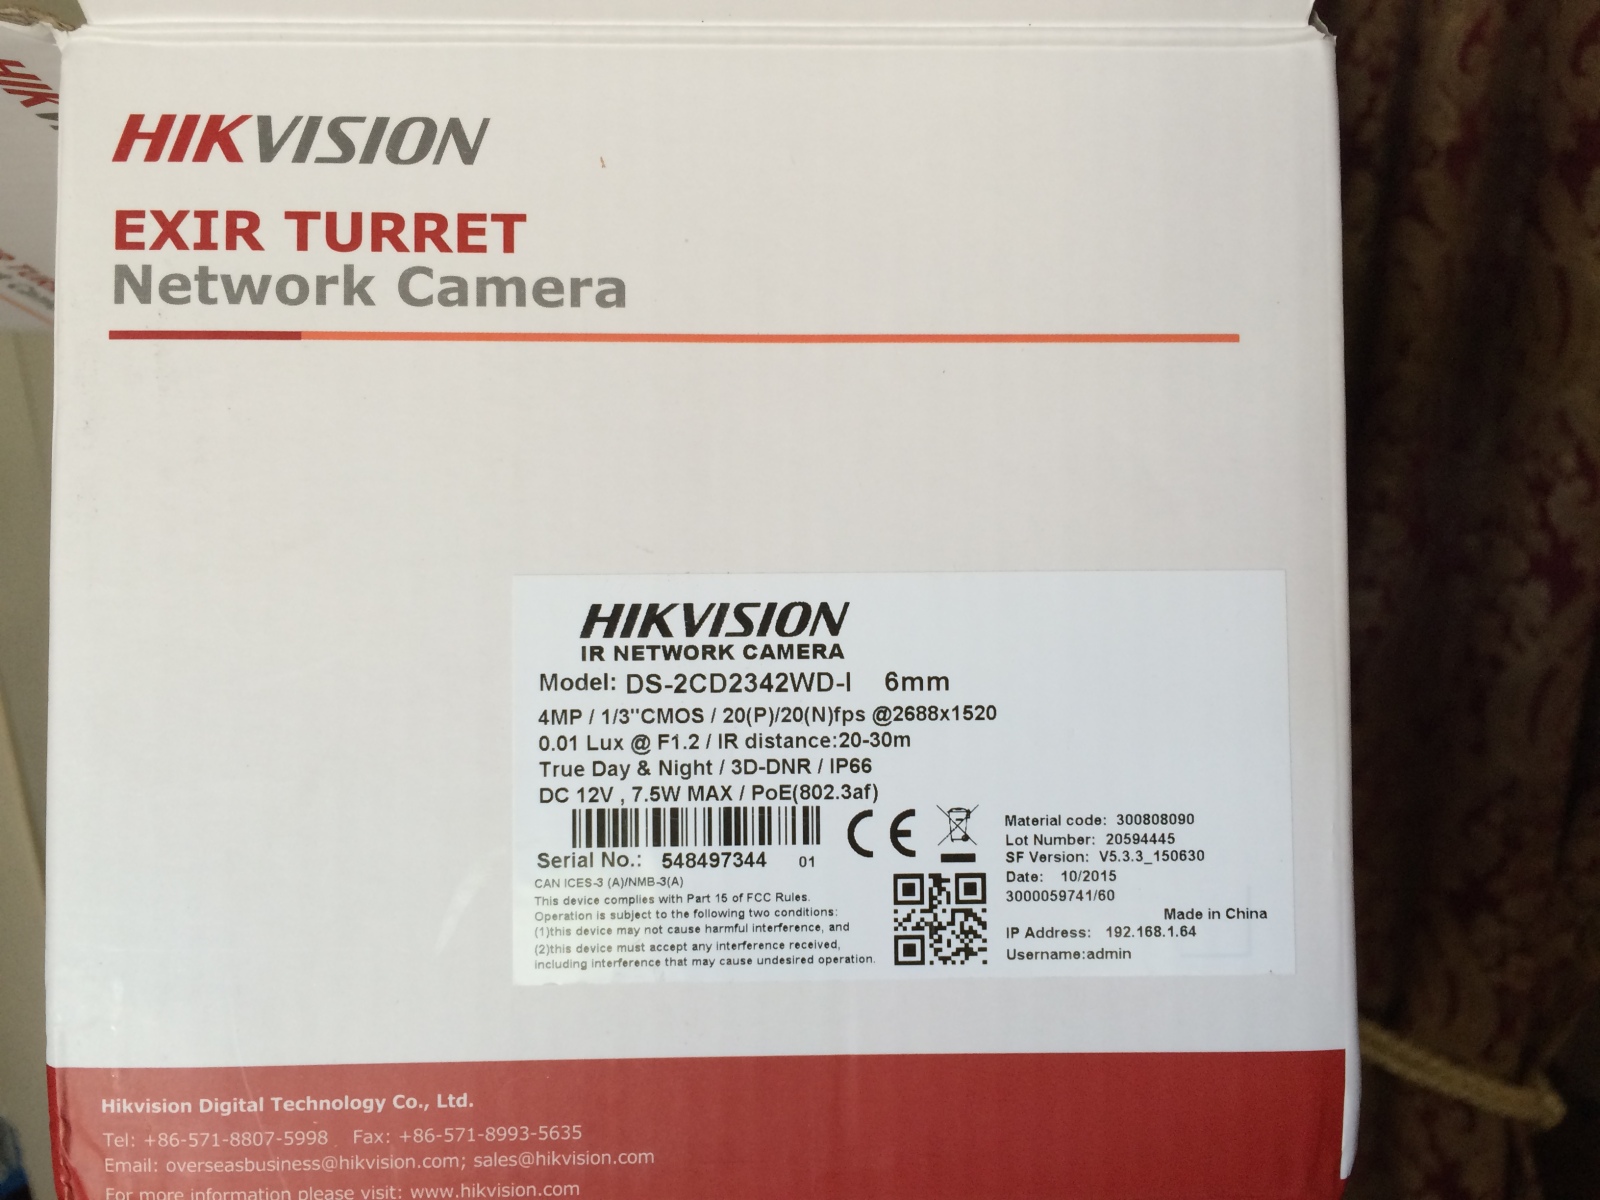 hikvision nvr serial number